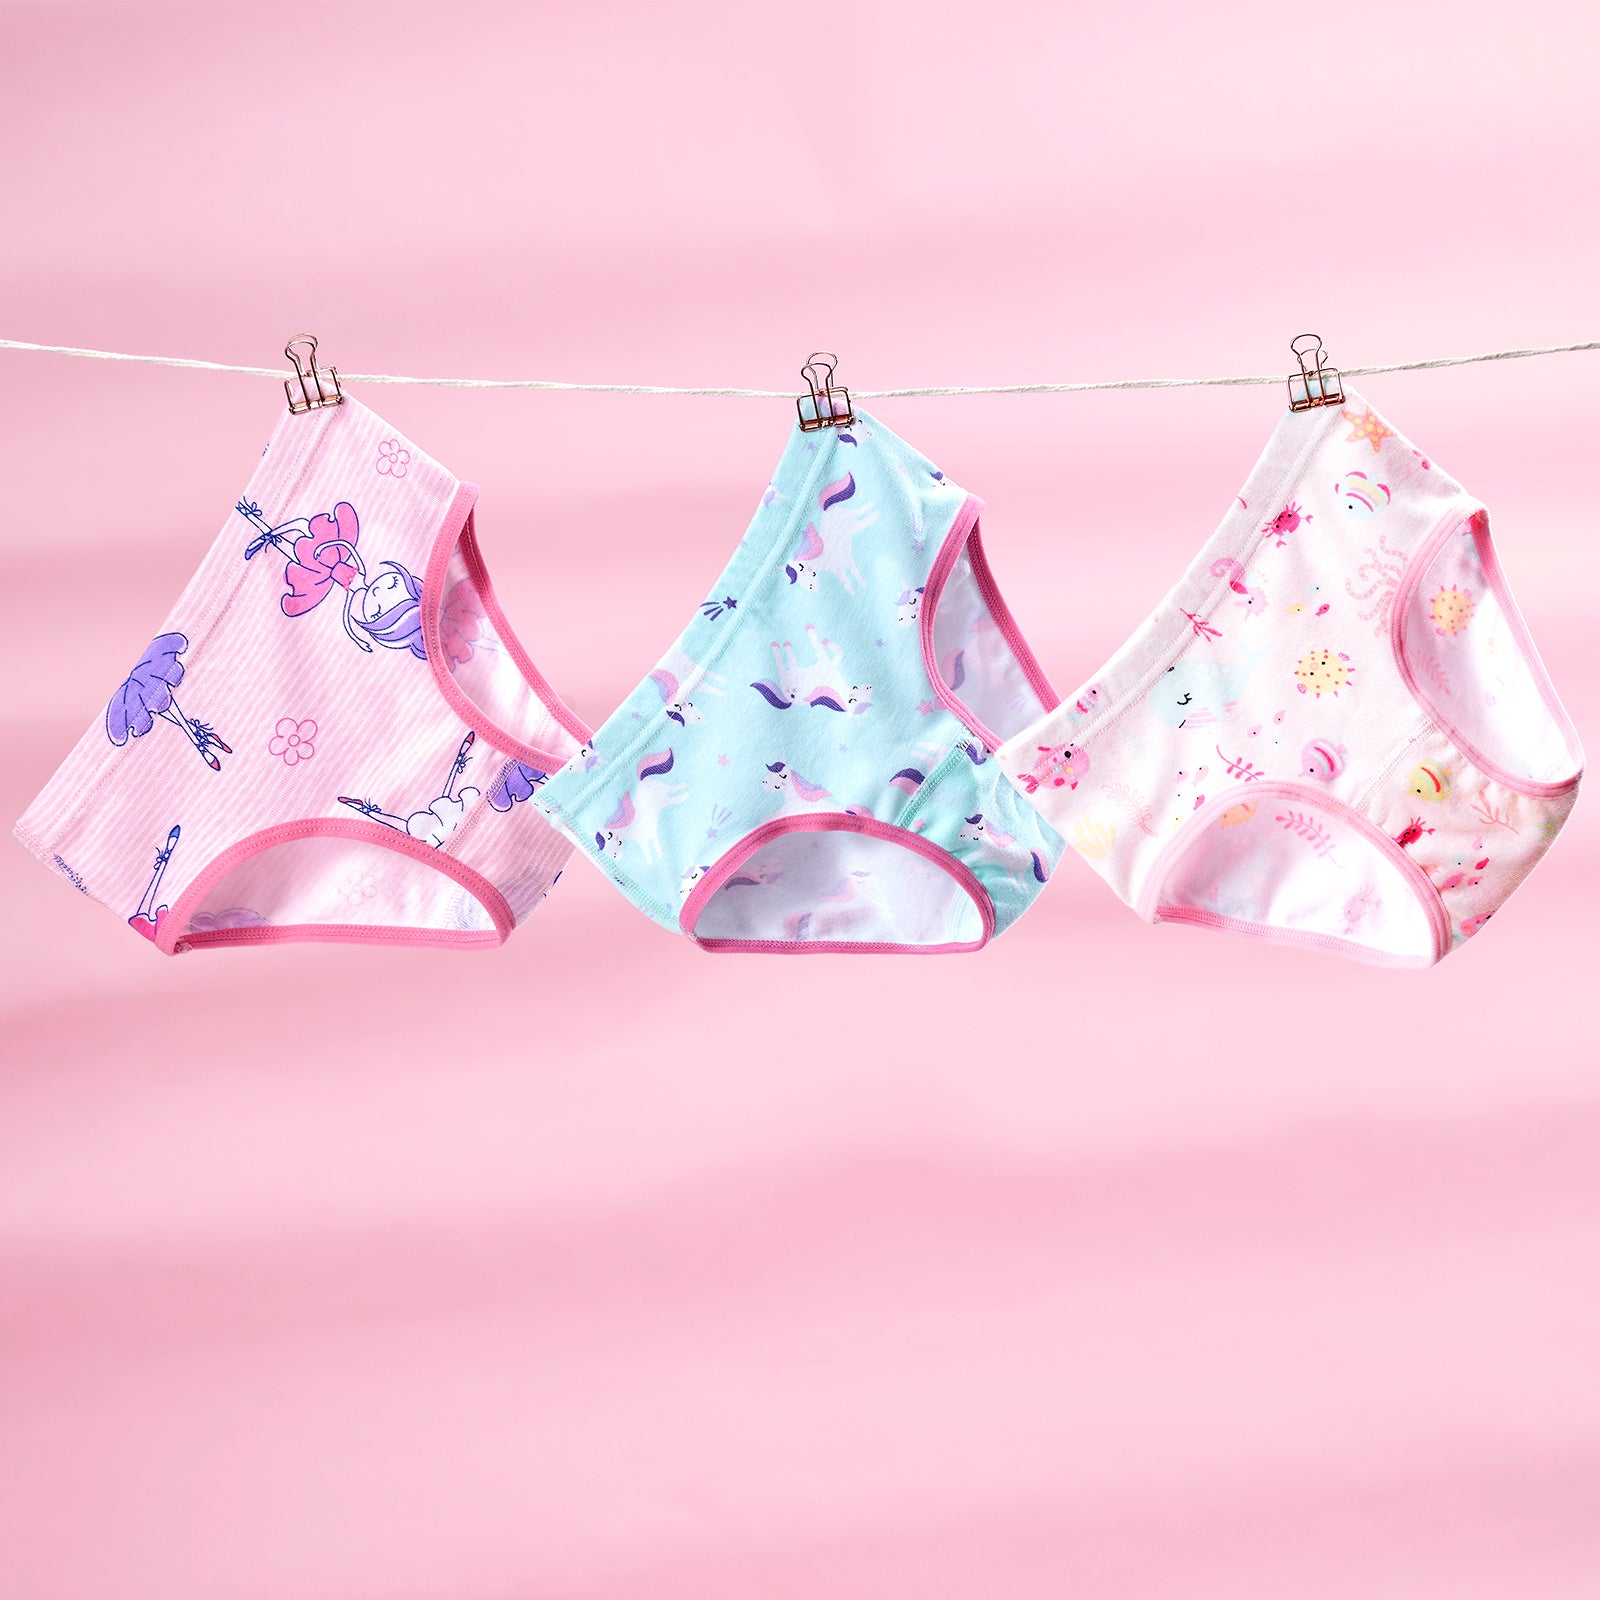 6-Pack Girls 100% Cotton Cute Cartoon Print Panties-06 – SYNPOS